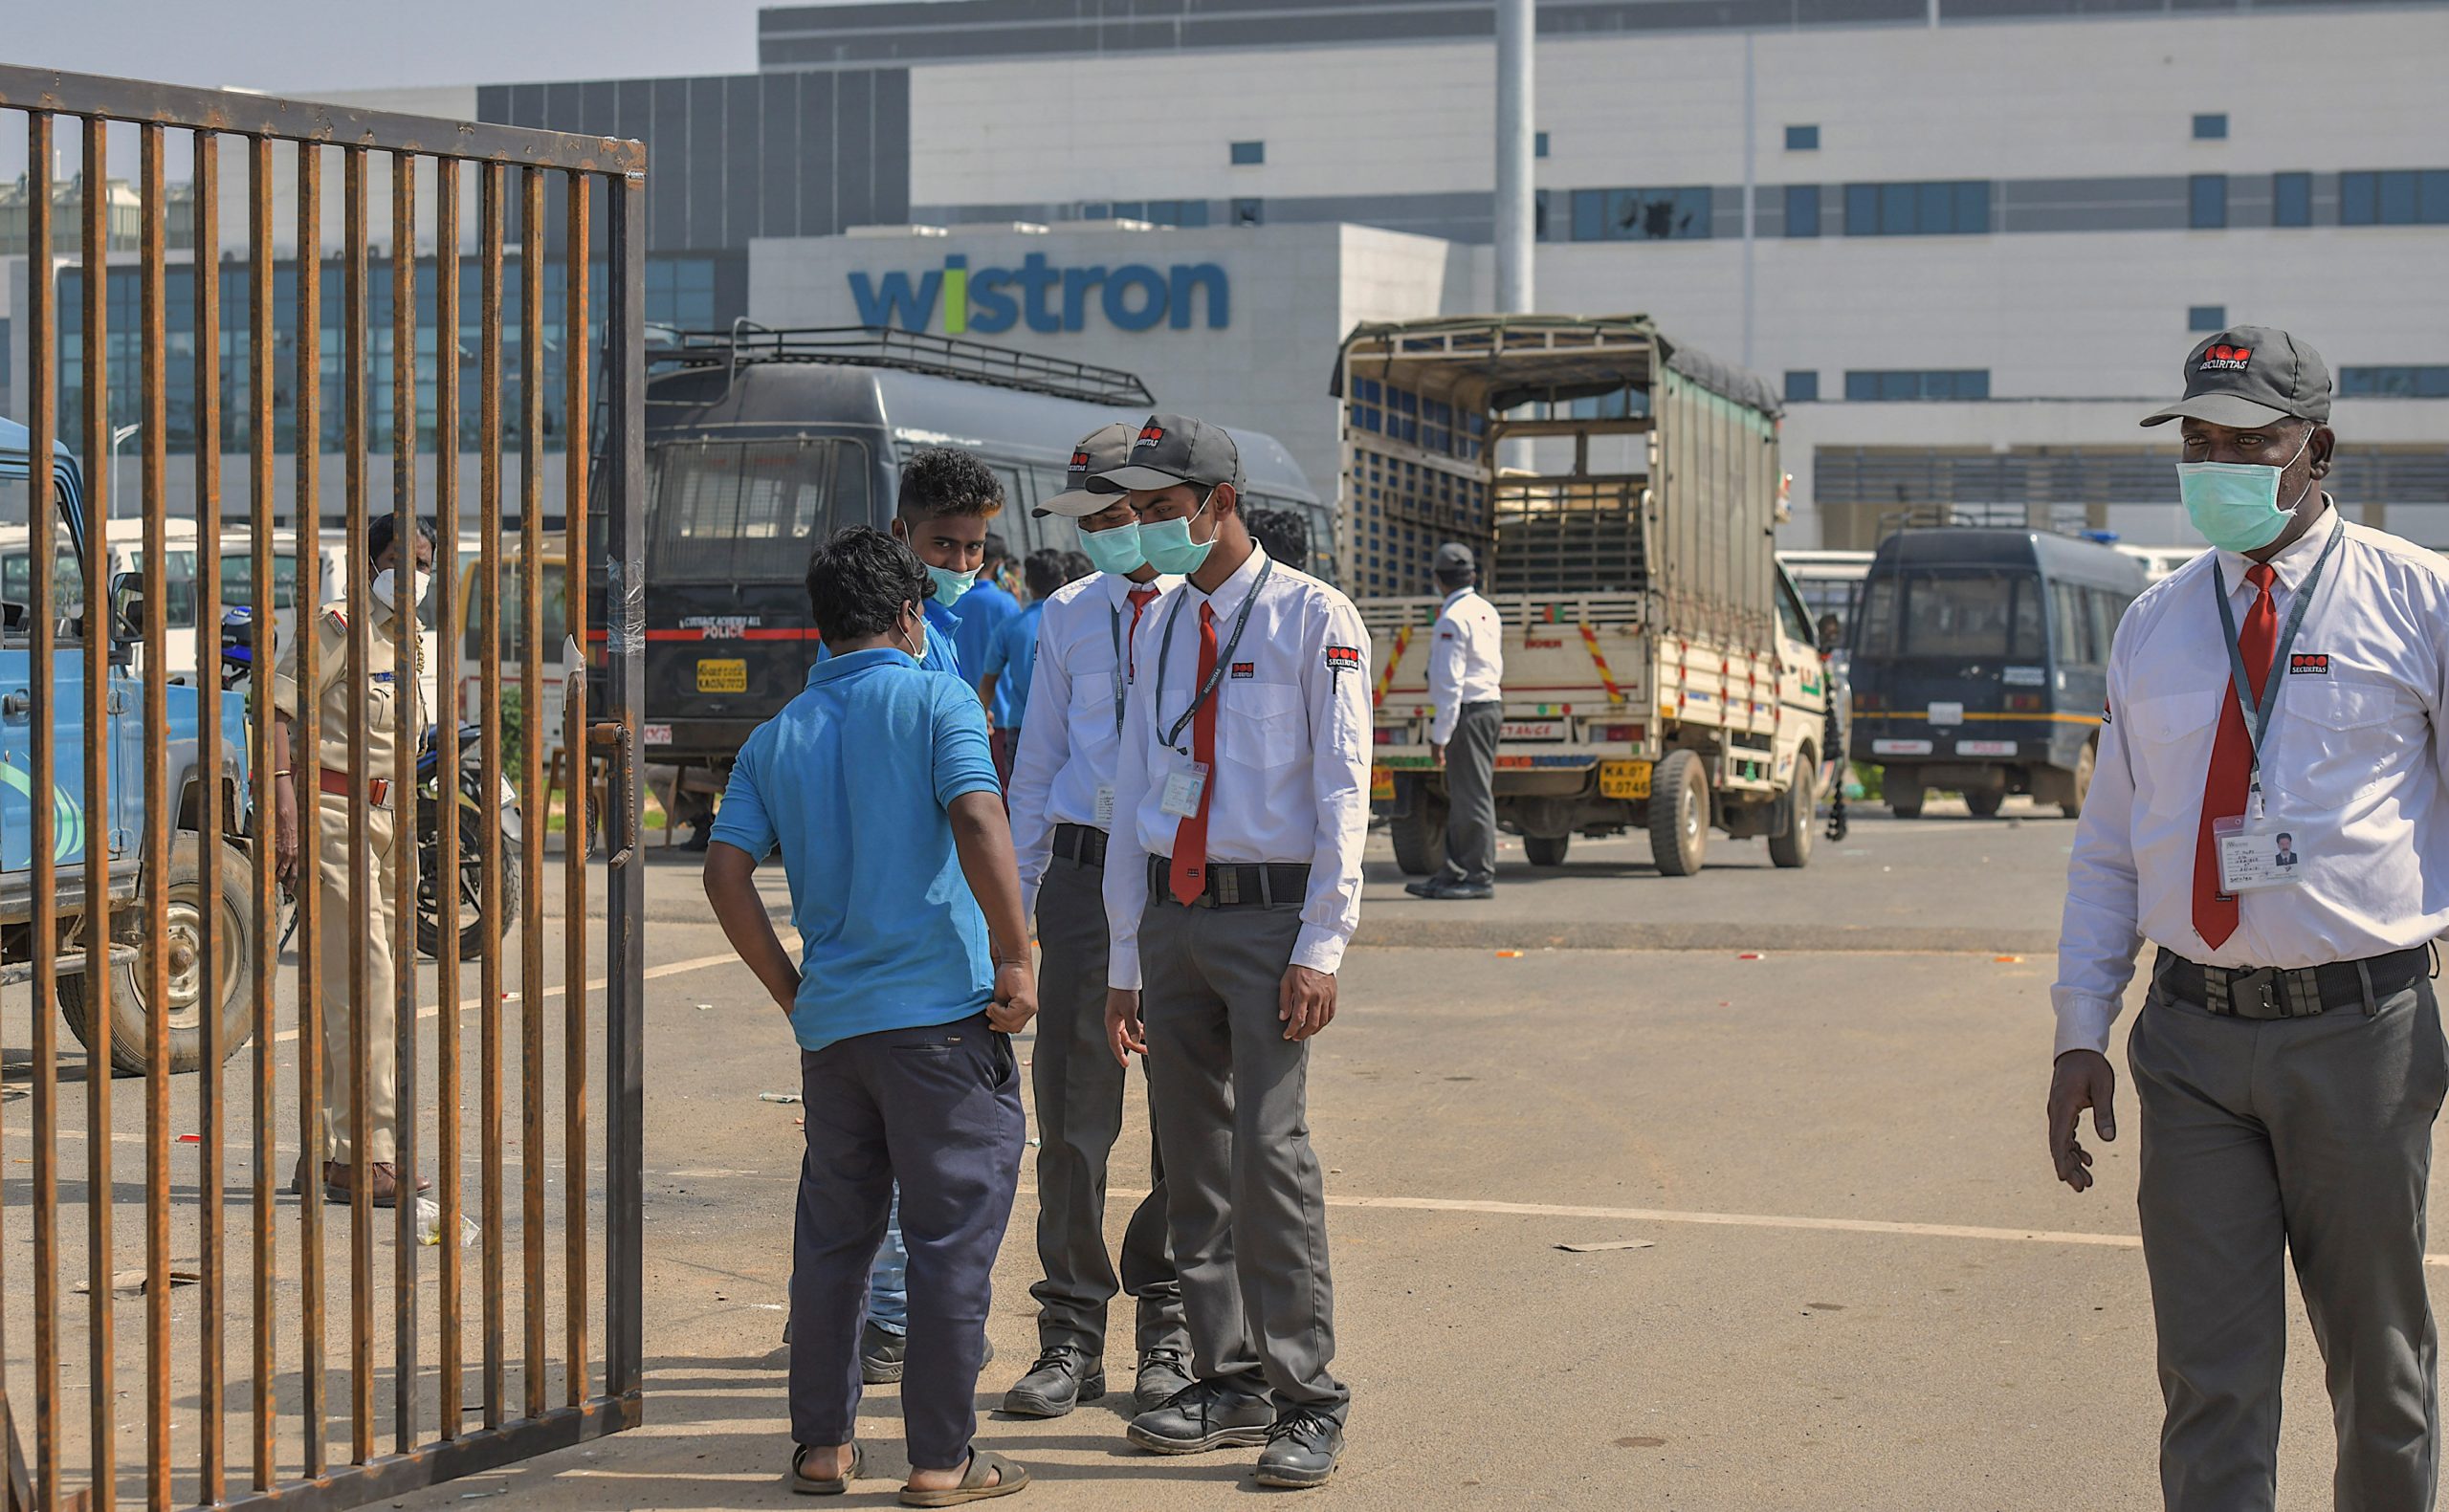 Wistron’s vandalised iPhone factory in Karnataka’s Kolar will be fully operational in 20 days